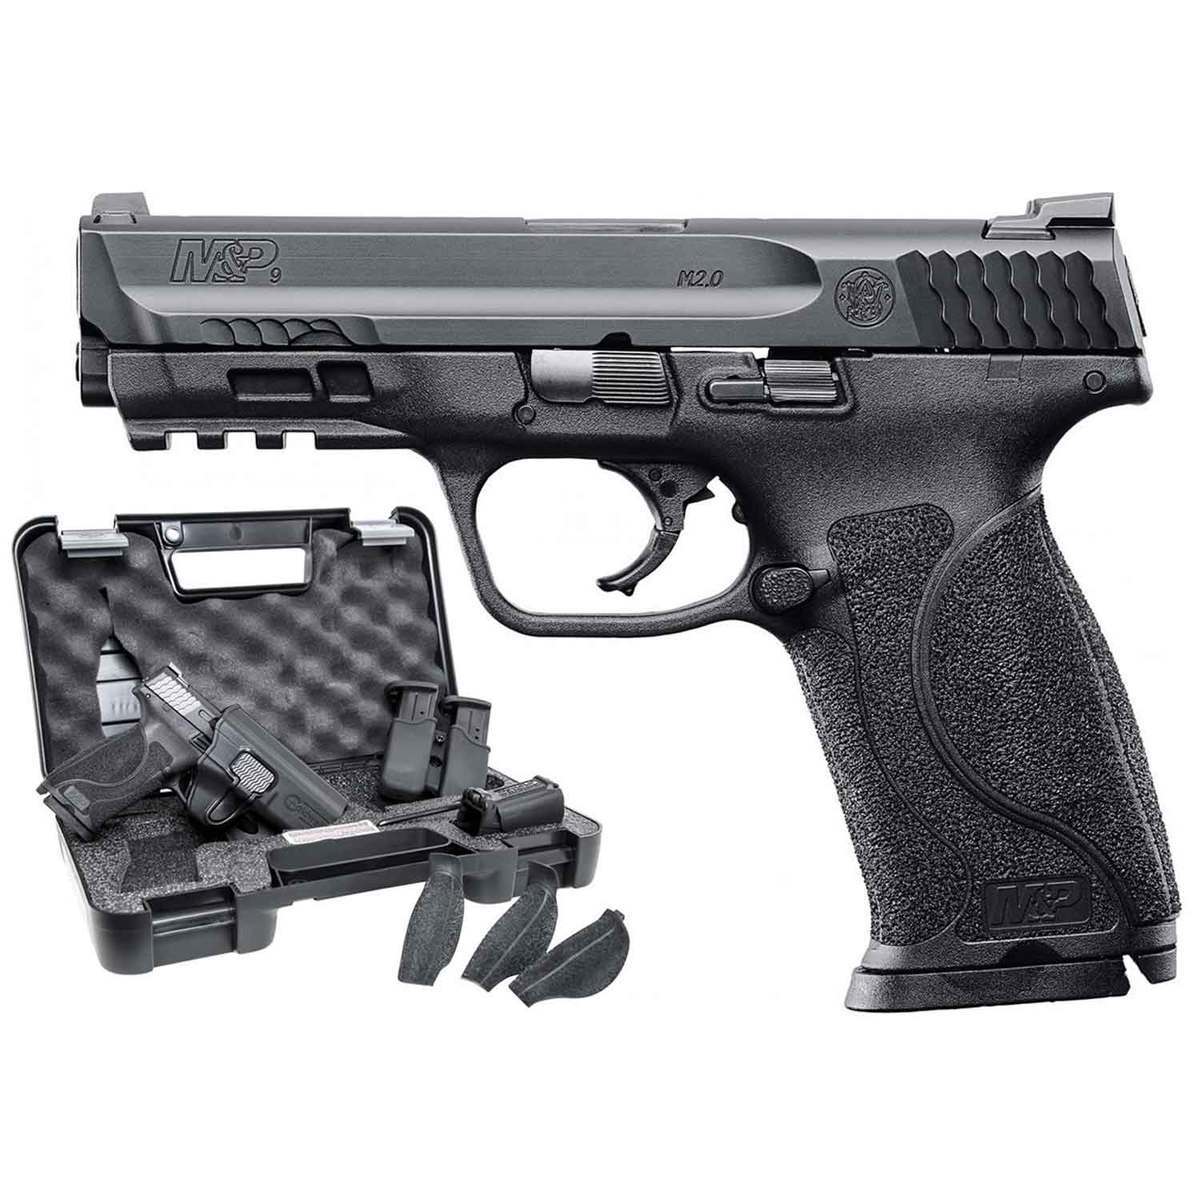 Smith & Wesson M&P 9 M2.0 Pistol For sale